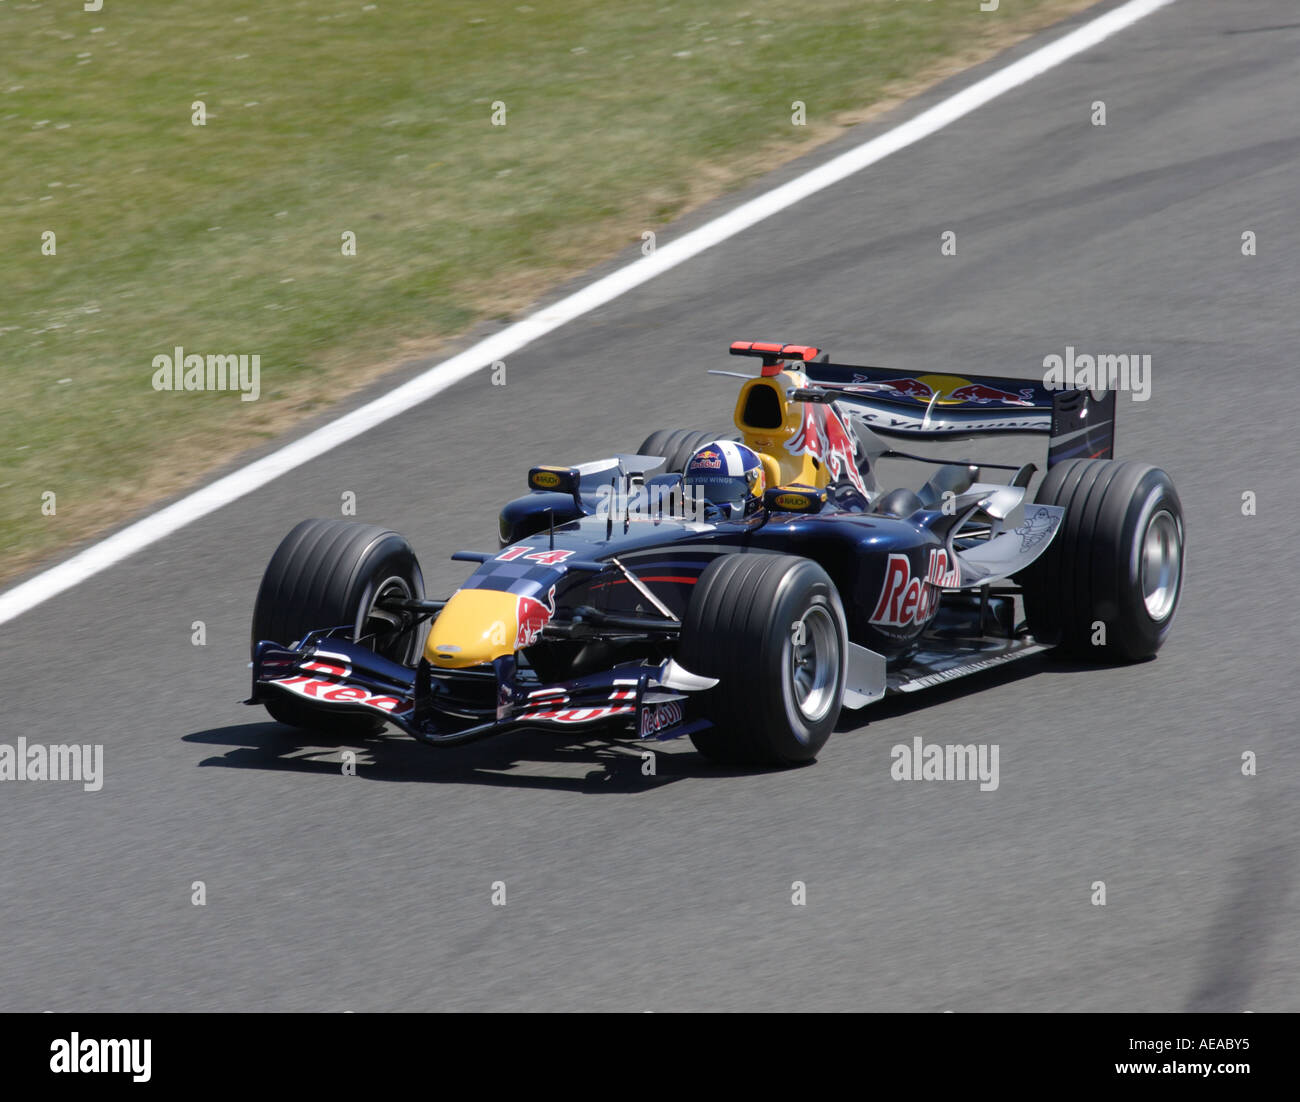 David Coulthard Red Bull Racing RBR British F1 Grand Prix Silverstone June 2006 Stock Photo